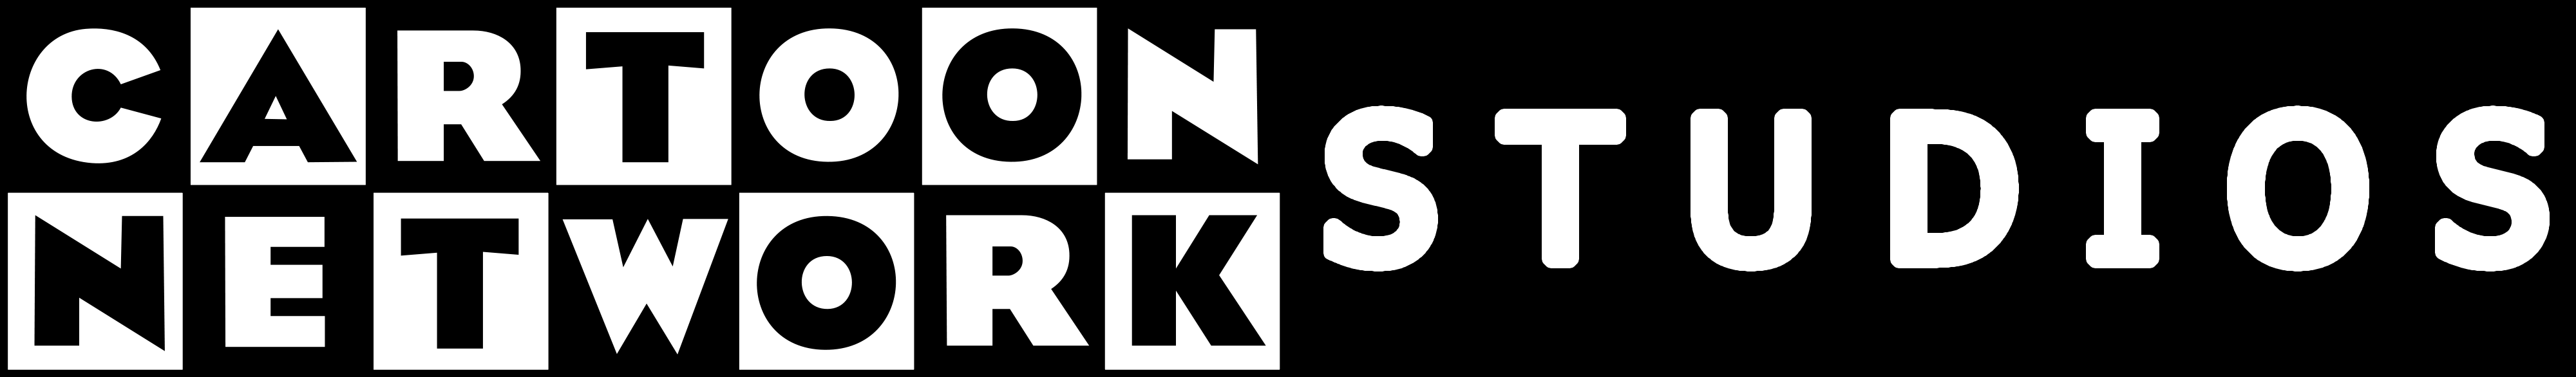 Cartoon Network Studios Logo - Cartoon Network Studios 2nd logo.png